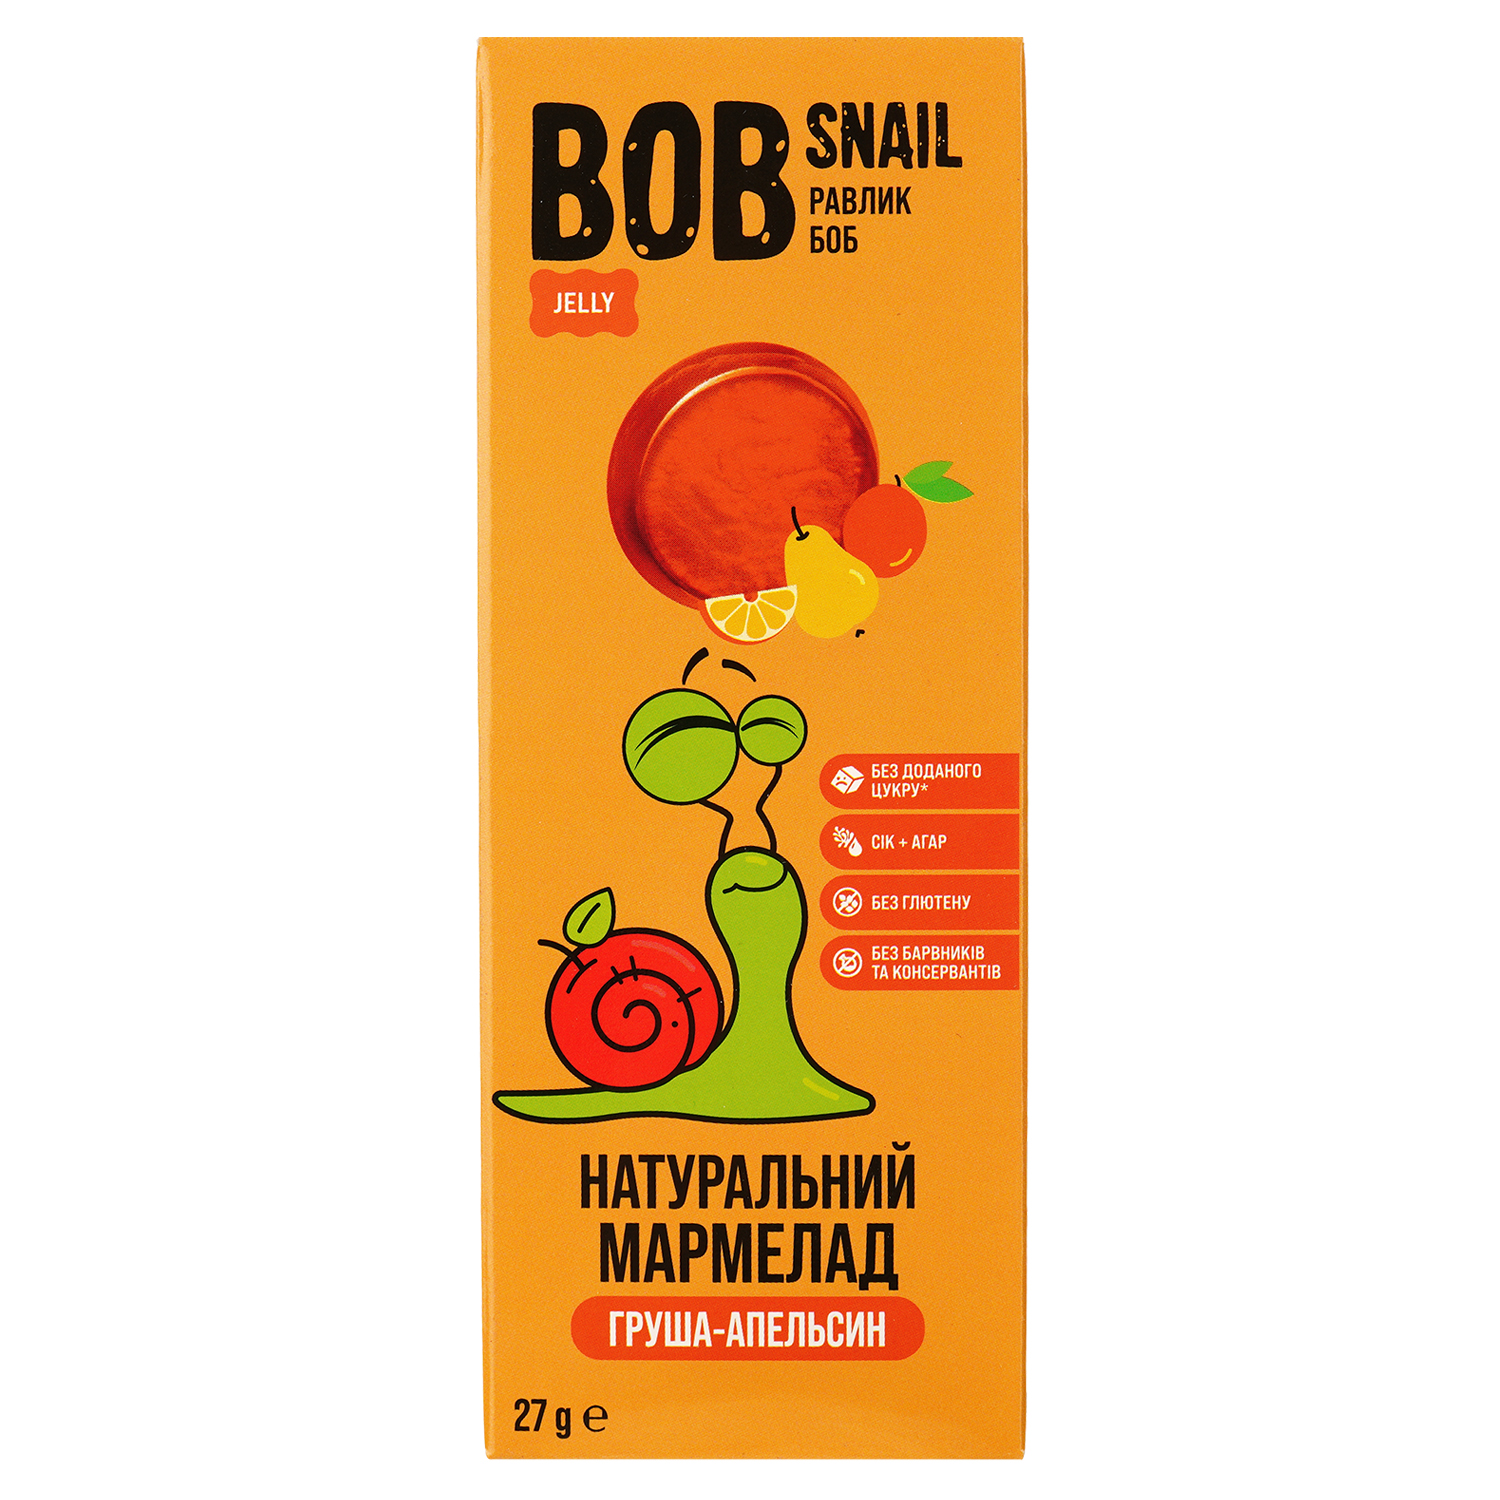 Фруктовый мармелад Bob Snail Груша-Апельсин 27 г - фото 1